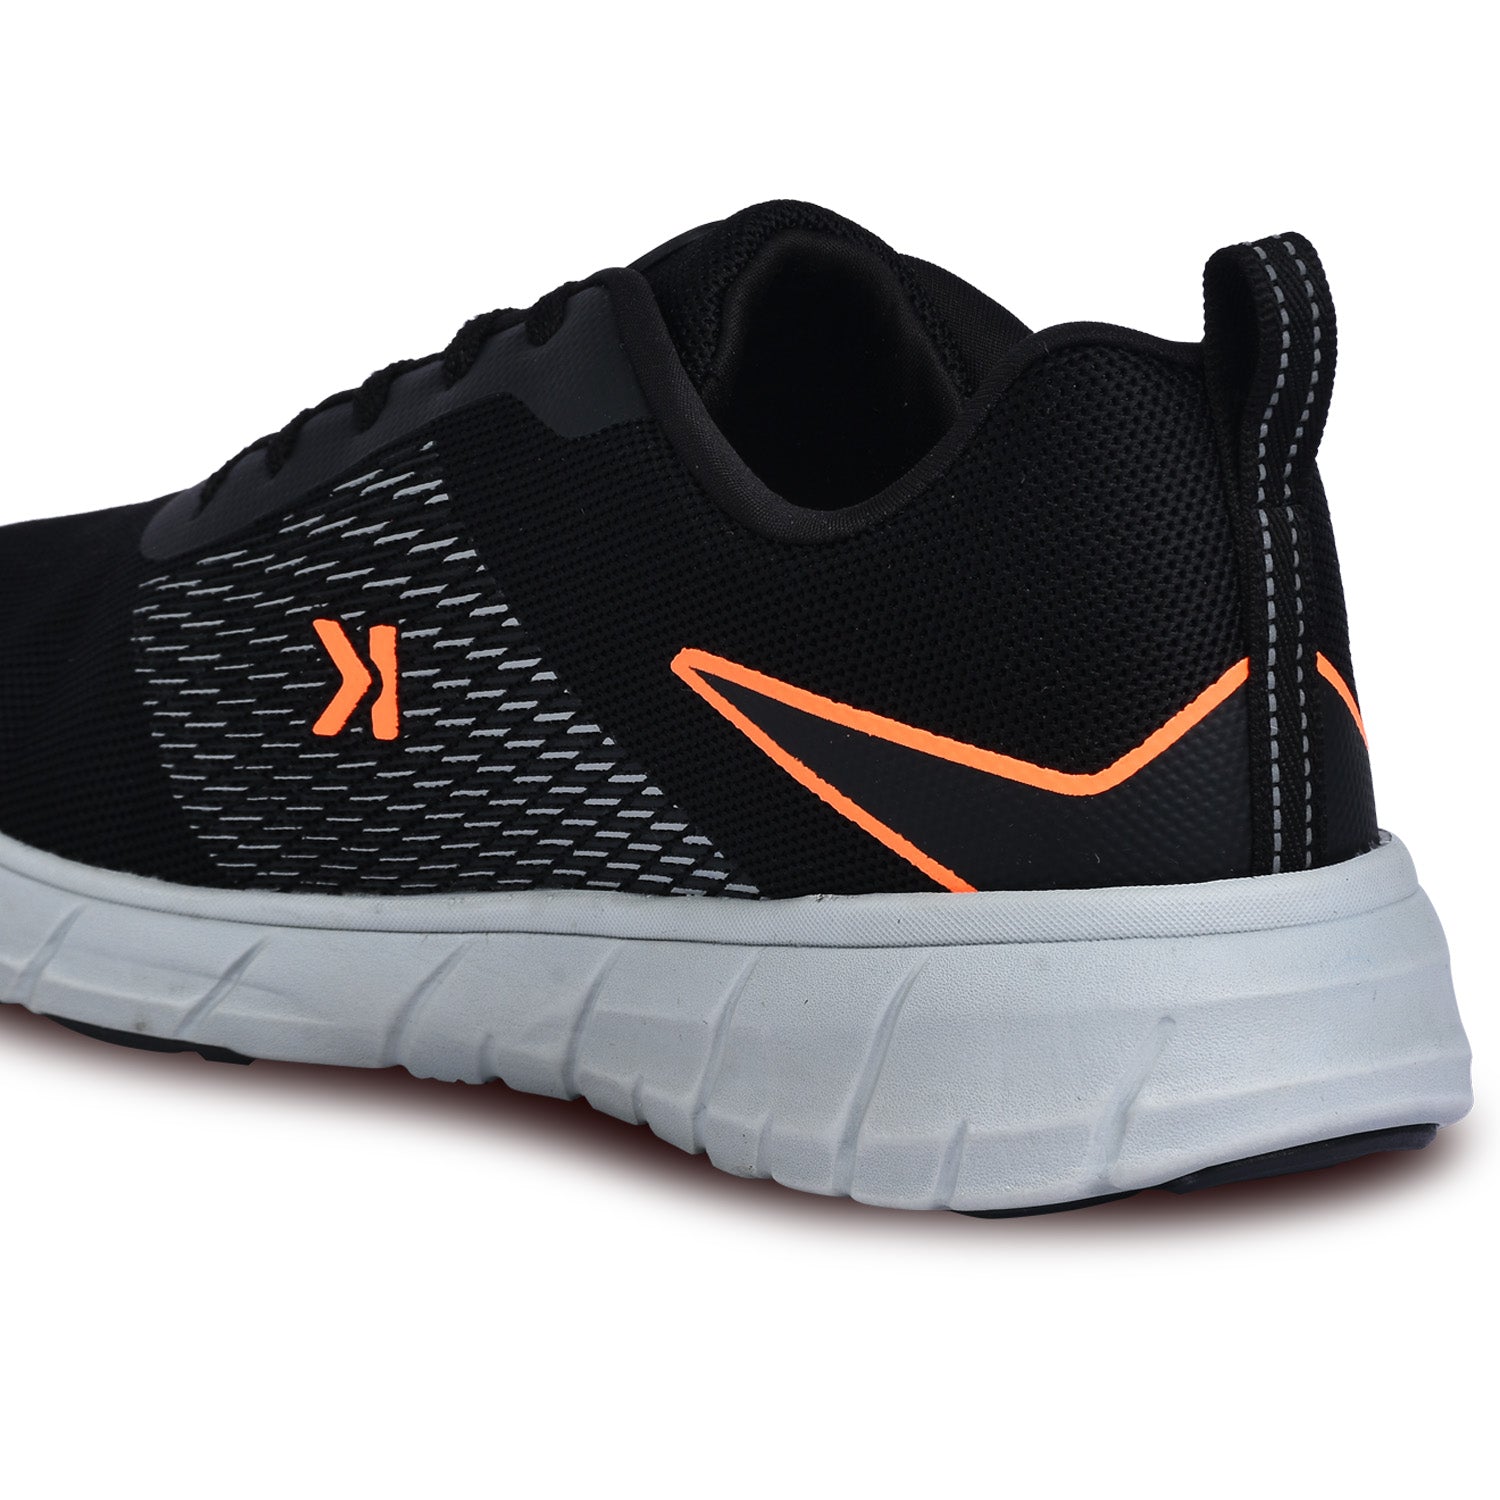 Eeken Black - Orange Athleisure Shoes for Men